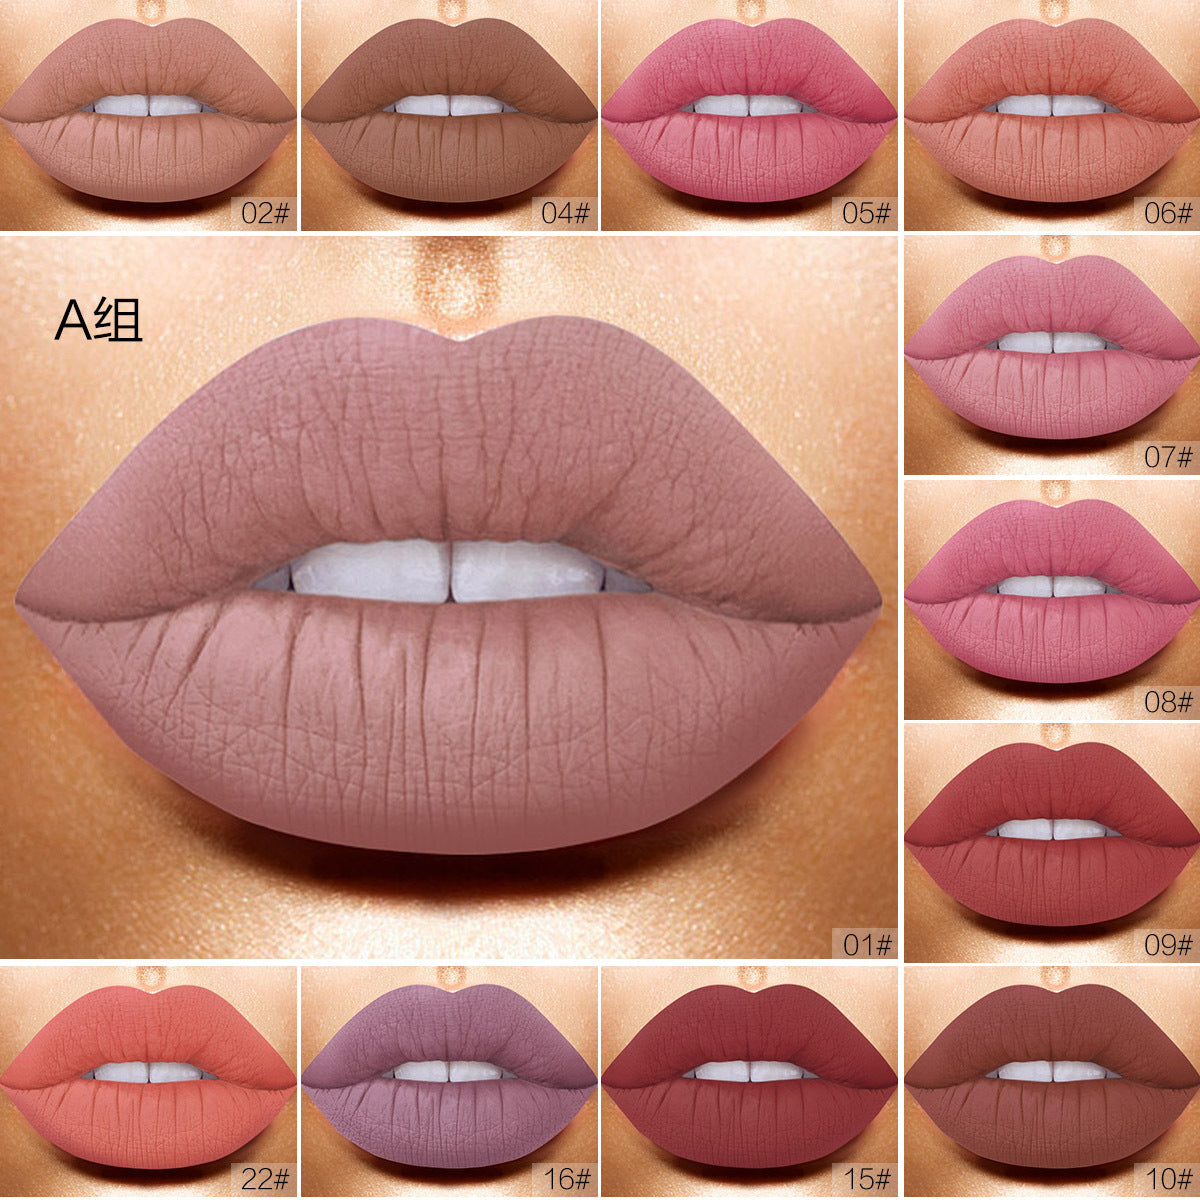 12 Color Matte Lipstick & Lip Gloss Combination Set